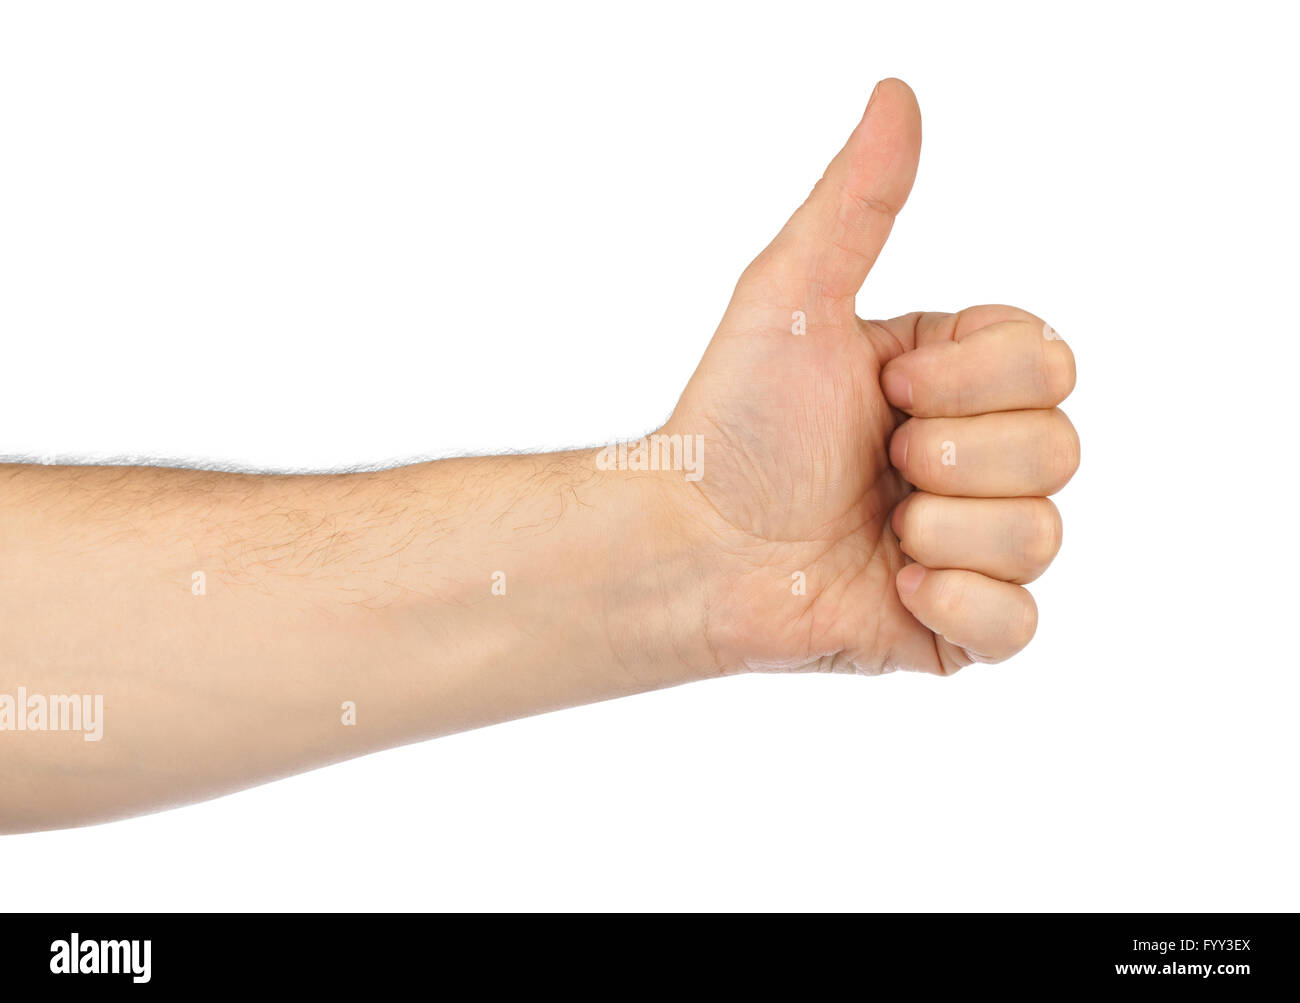 Gesturing hand Stock Photo